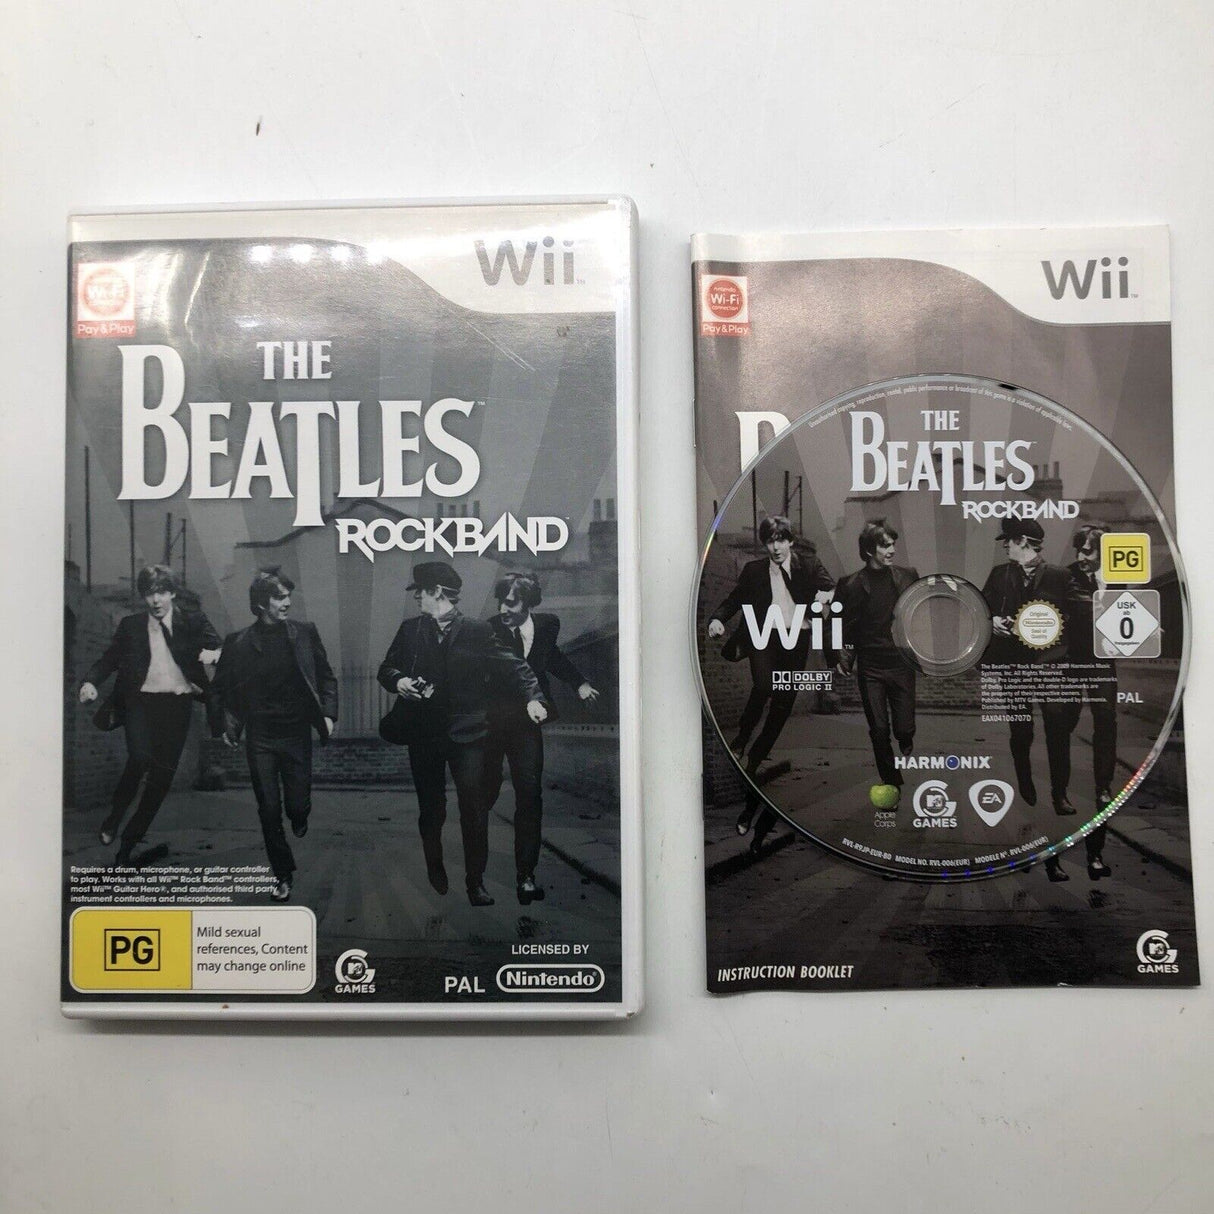 The Beatles Rockband Nintendo Wii Game + Manual PAL 28j4